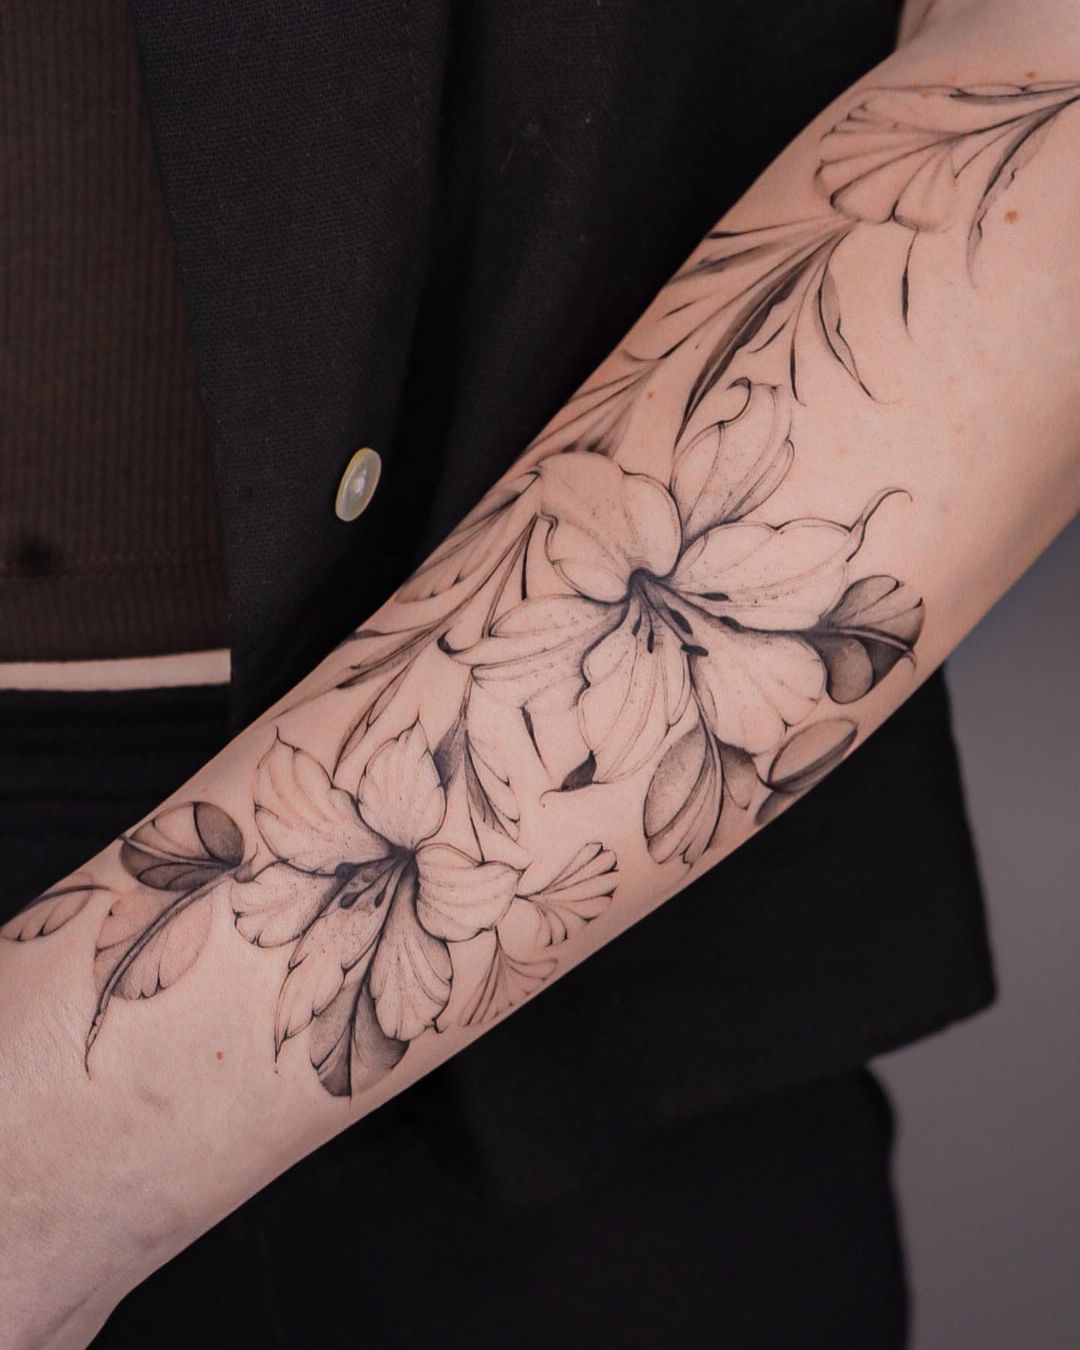 fineline lily tattoo on forearm by lasstattoo